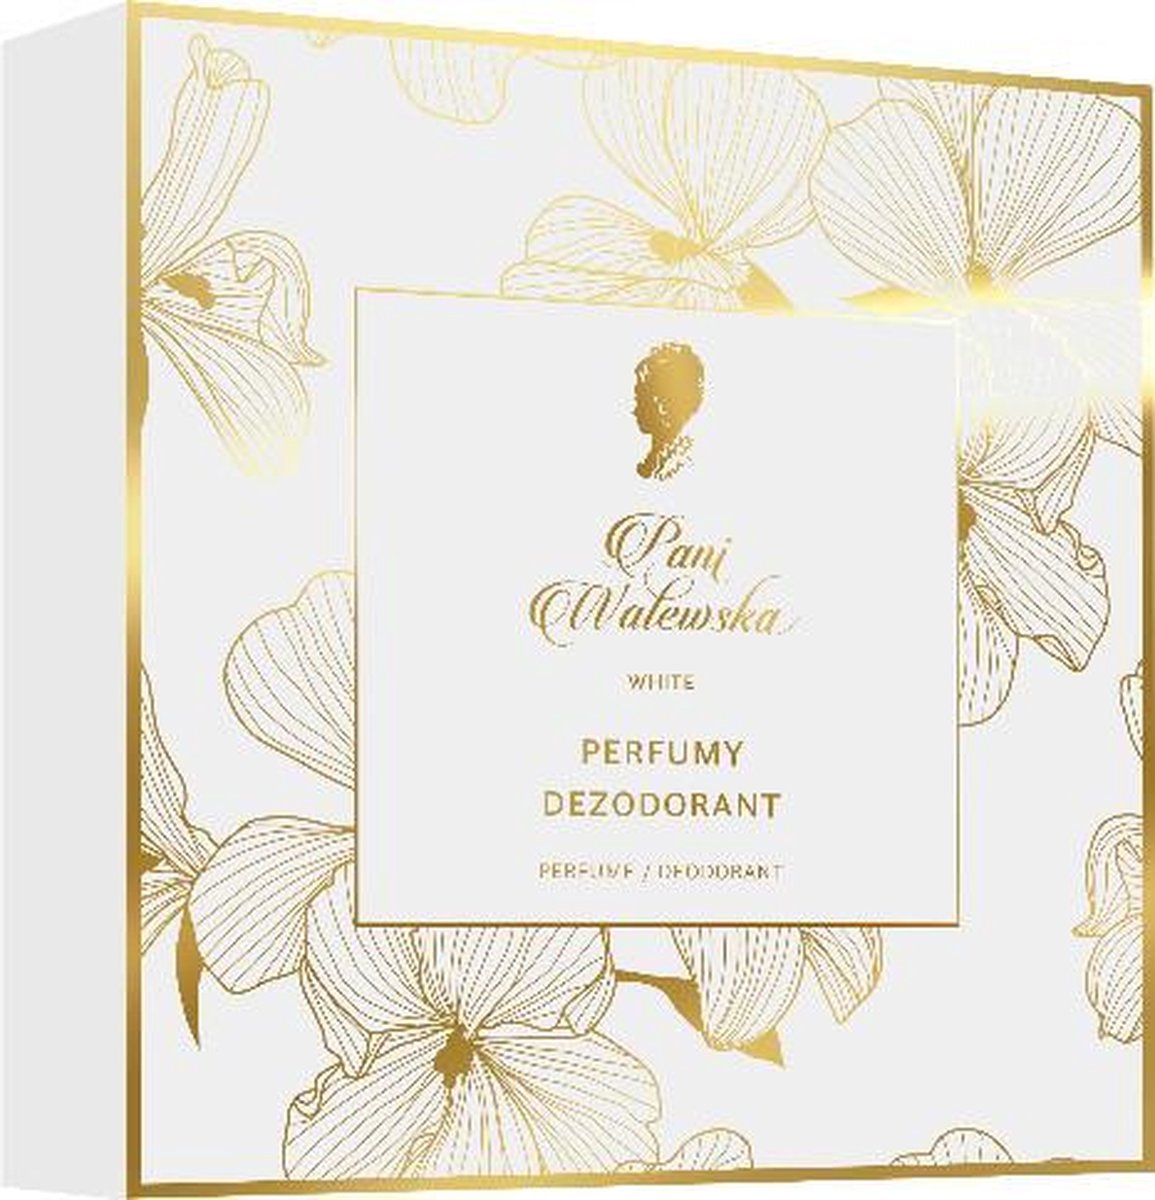 Gift set Parfum en deodorant Pani Walewska white , witte bloemen en vanille geur, Coffret cadeau Parfum et déodorant Pani Walewska blanc, fleurs blanches et parfum vanille